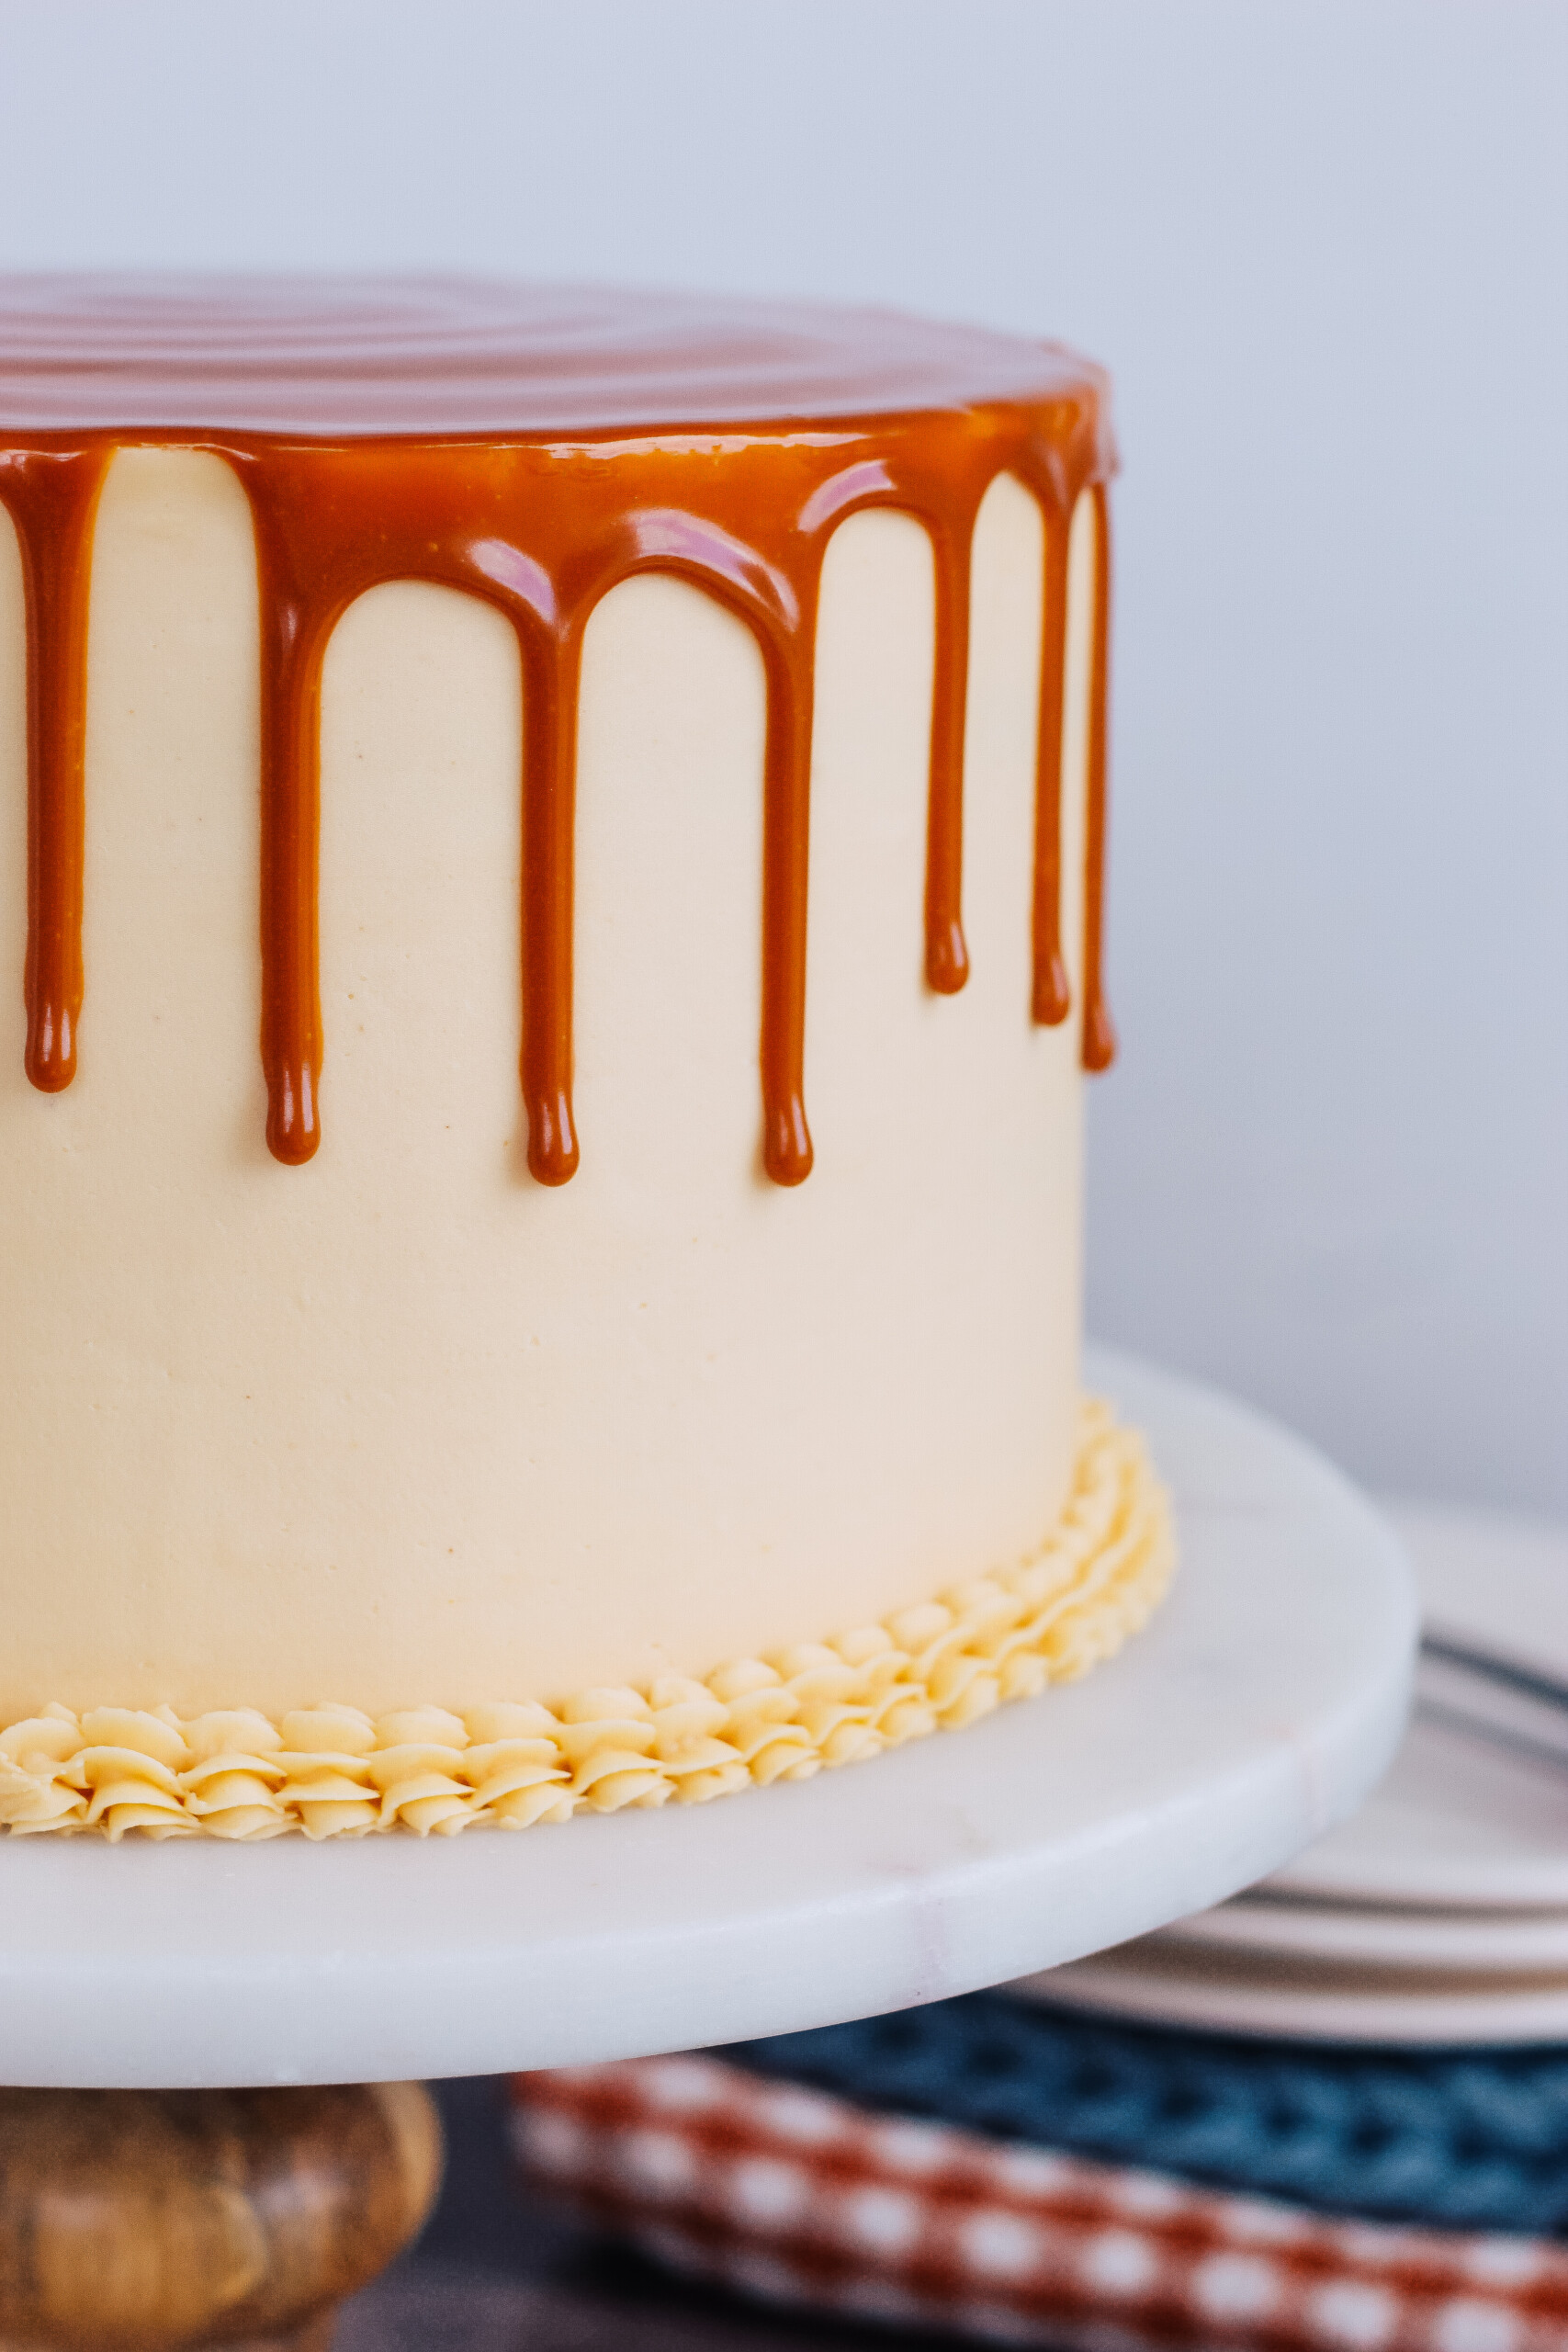 Caramel drip on a cake.